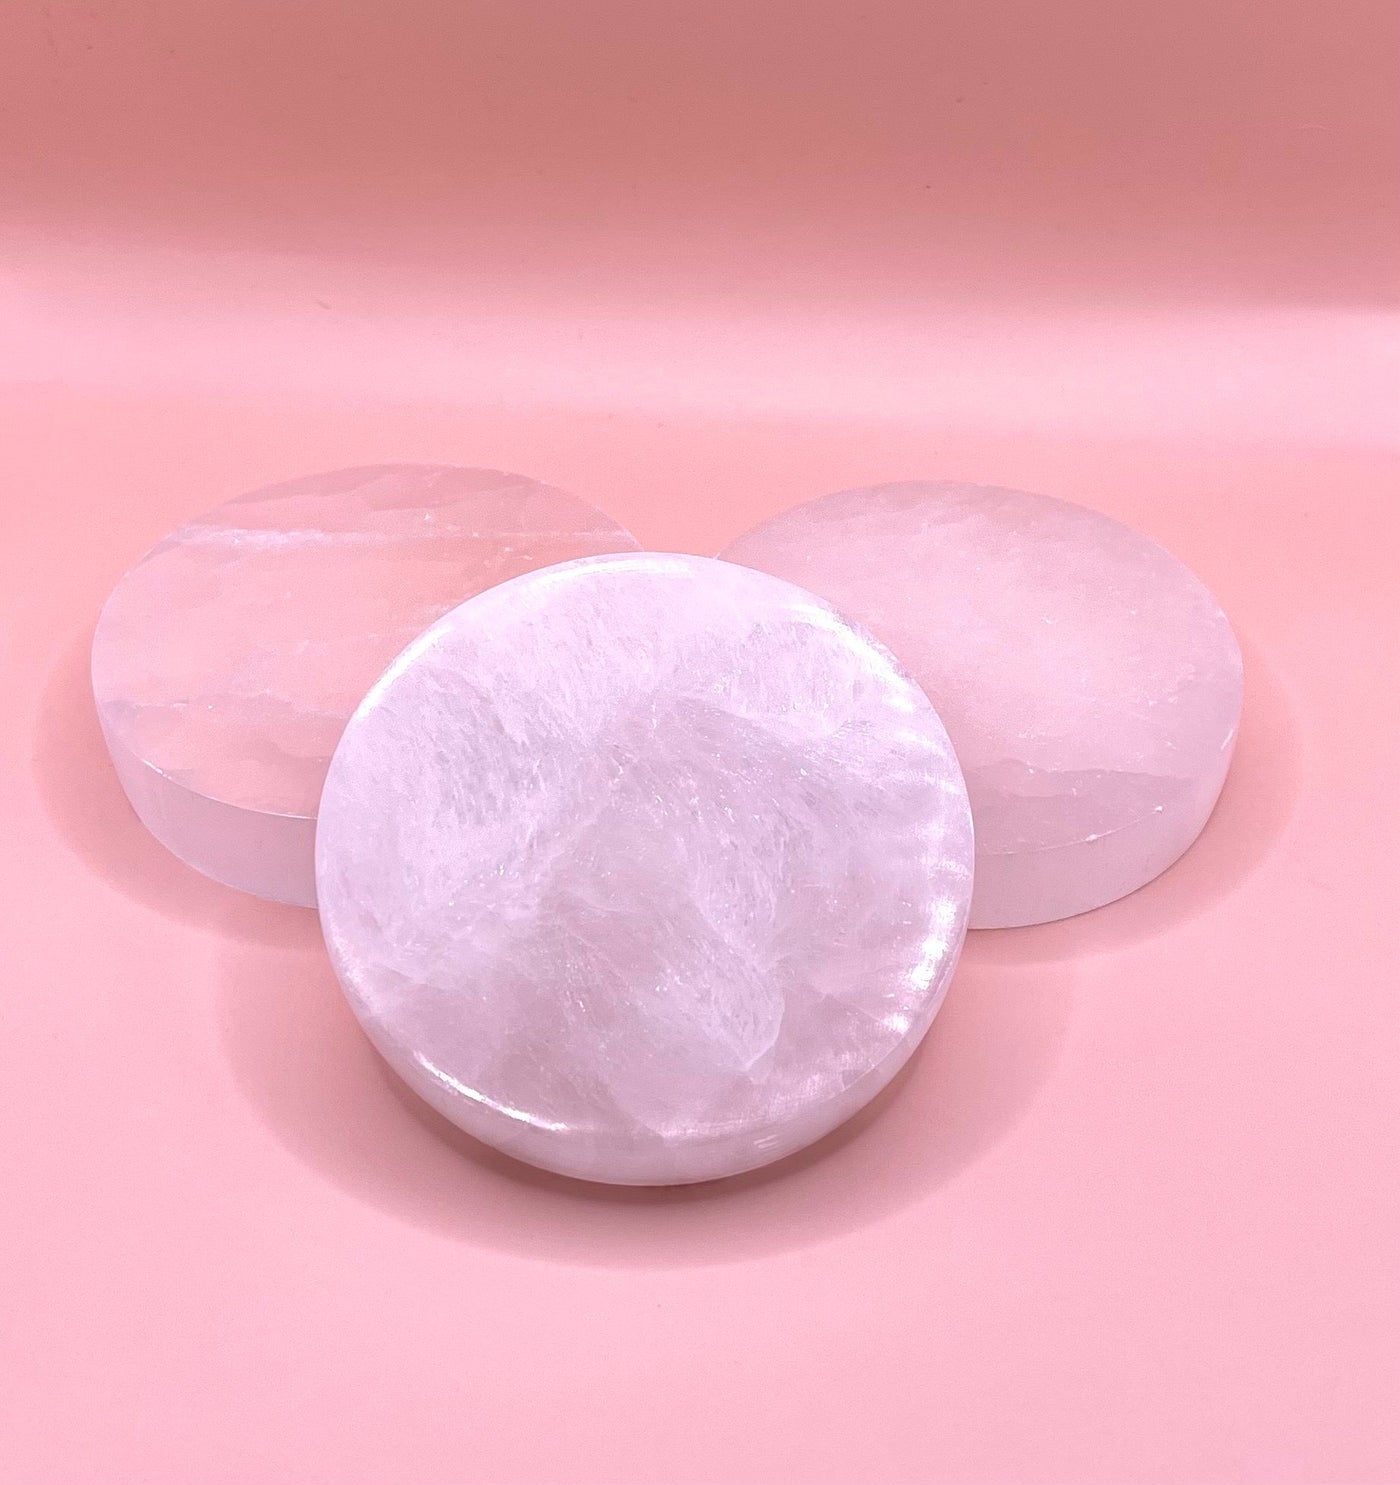 Selenite Medium Charging Plates Reiki Energy Healing CrystalThe Spiritual Crystal Fairy